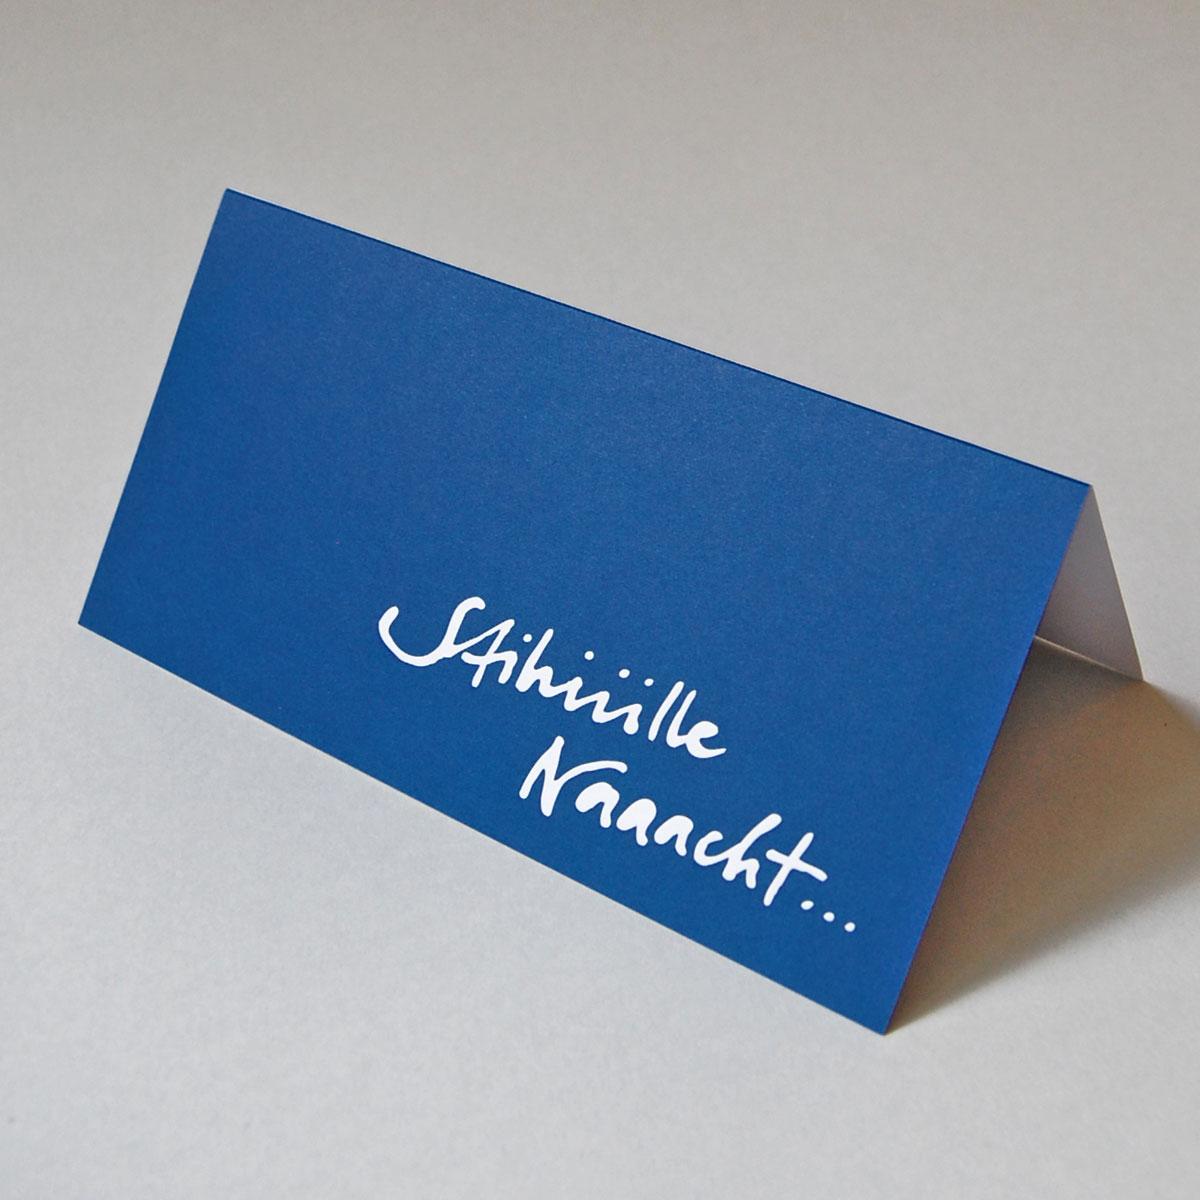 blaue Recycling-Weihnachtskarte: Stihiiille Naaacht...